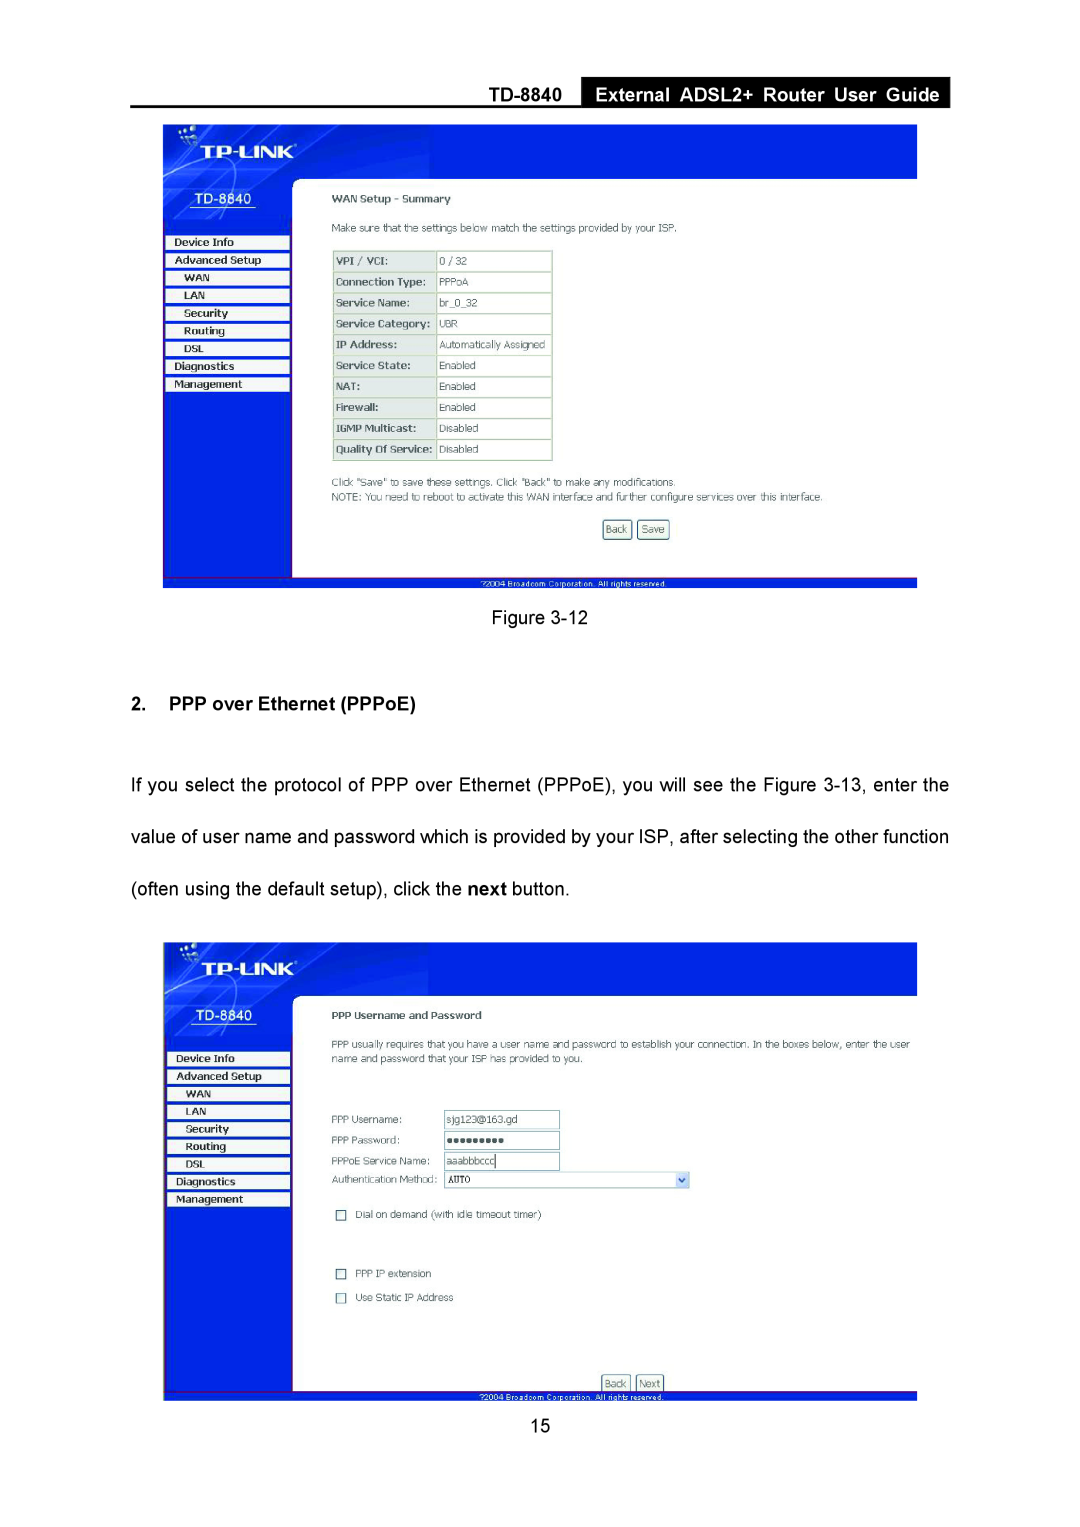 TP-Link TD-8840 manual External ADSL2+ Router User Guide, PPP over Ethernet PPPoE 